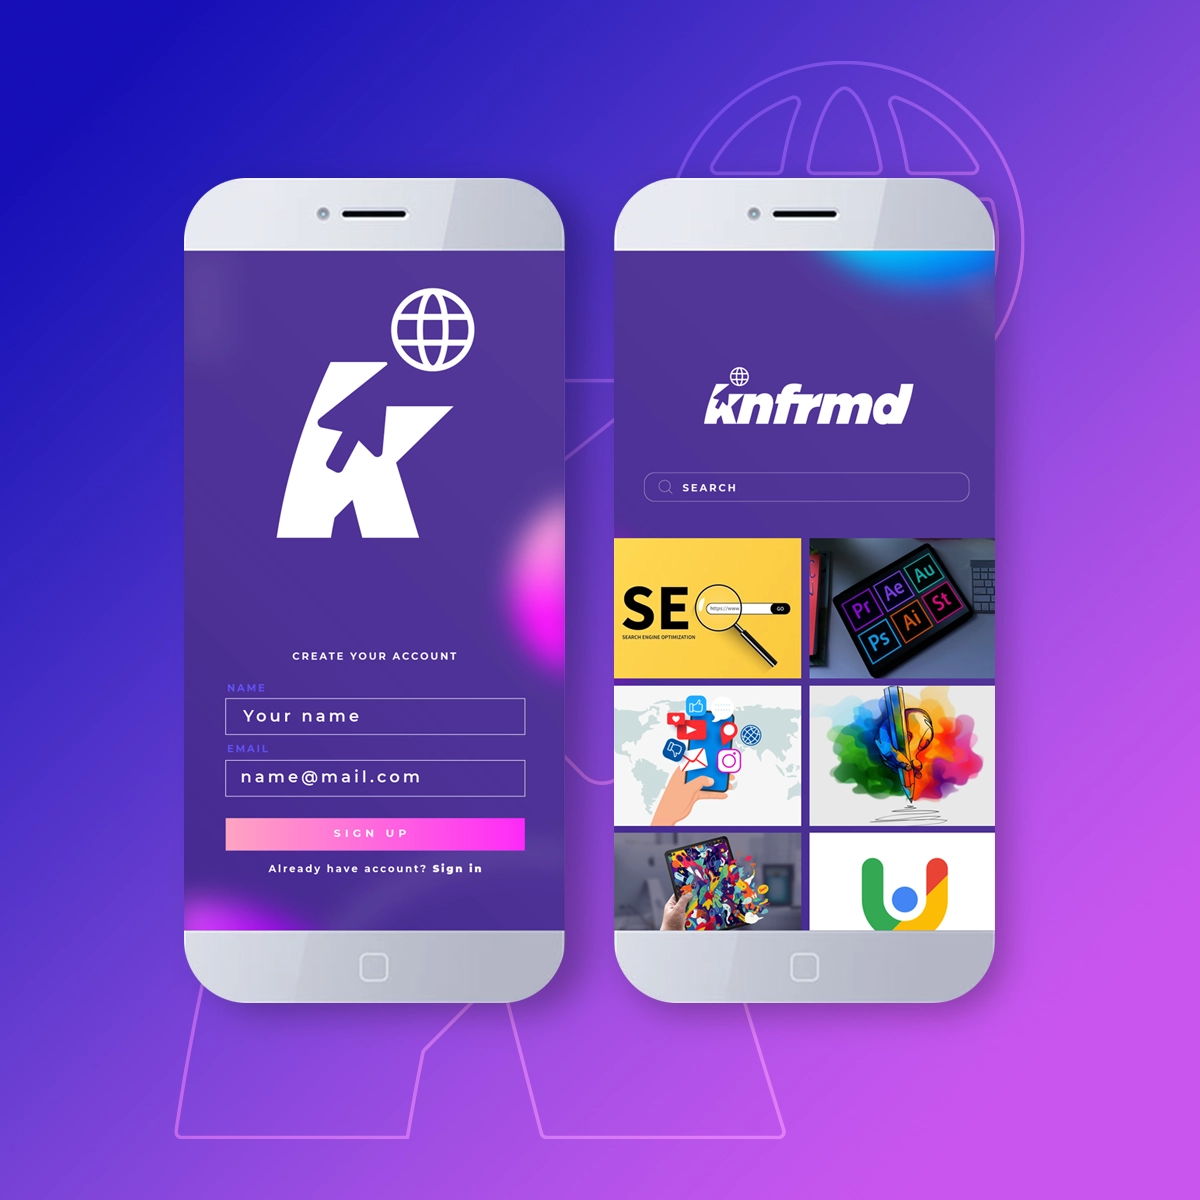 mock-up design of the Knfrmd mobile app on a mobile device